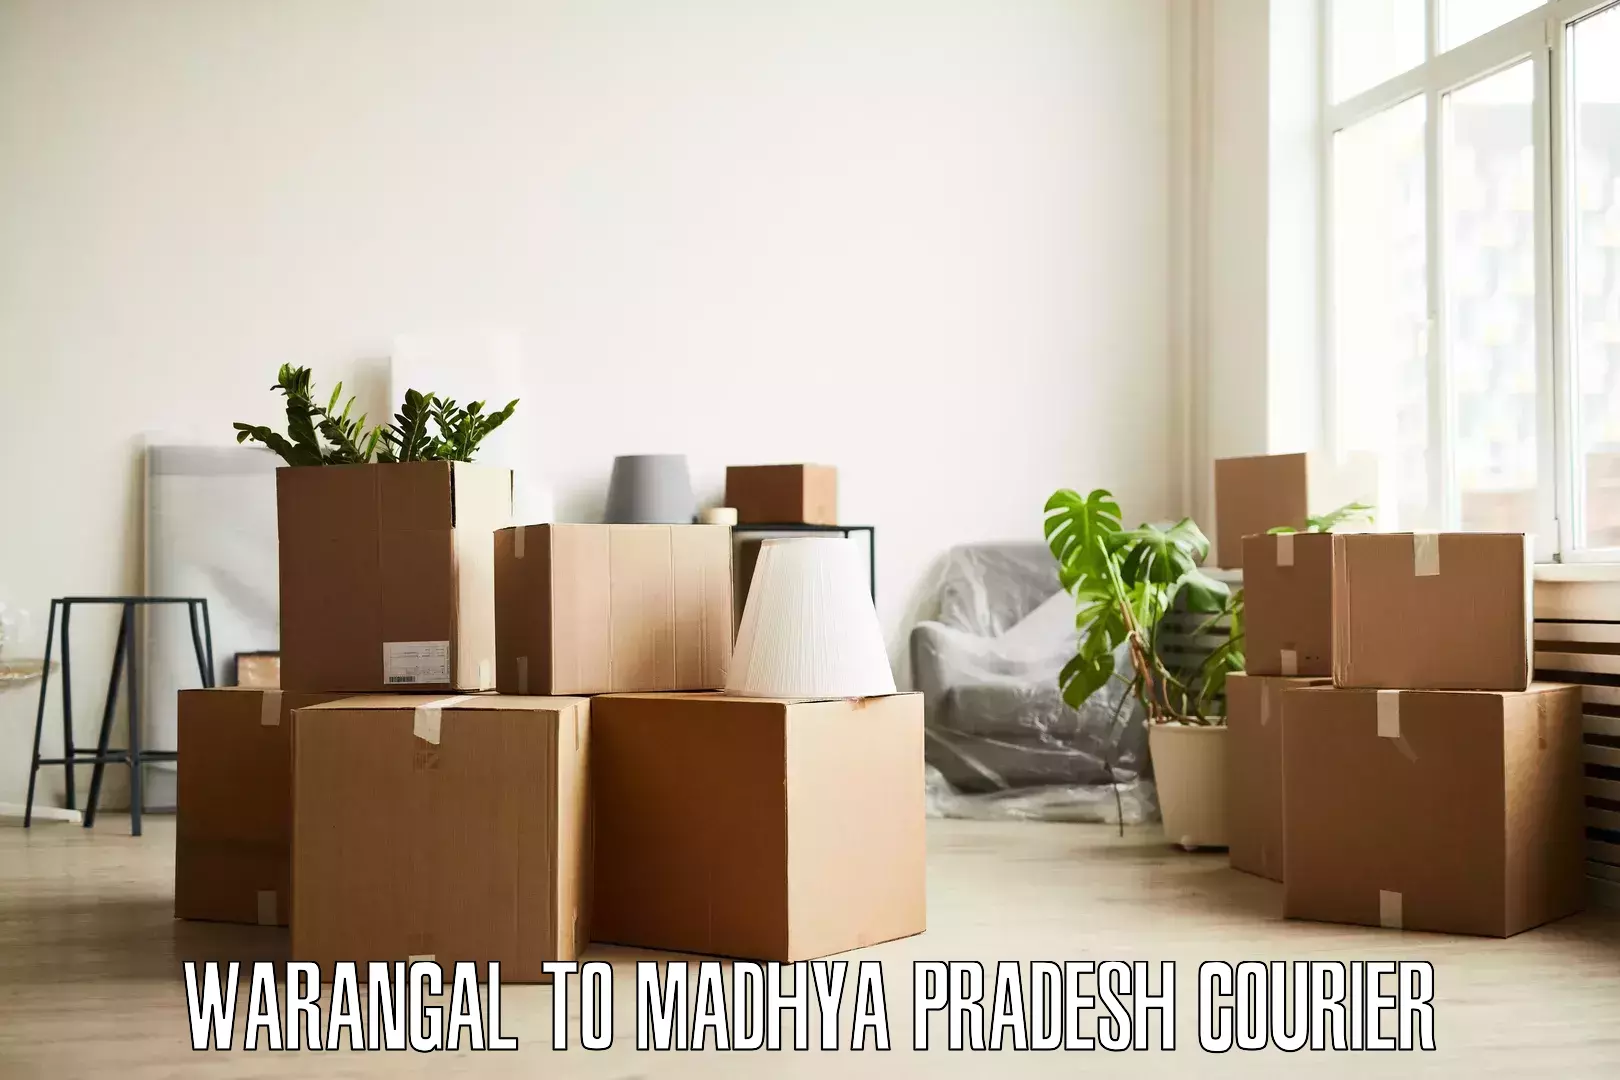 Furniture delivery service Warangal to Rewa